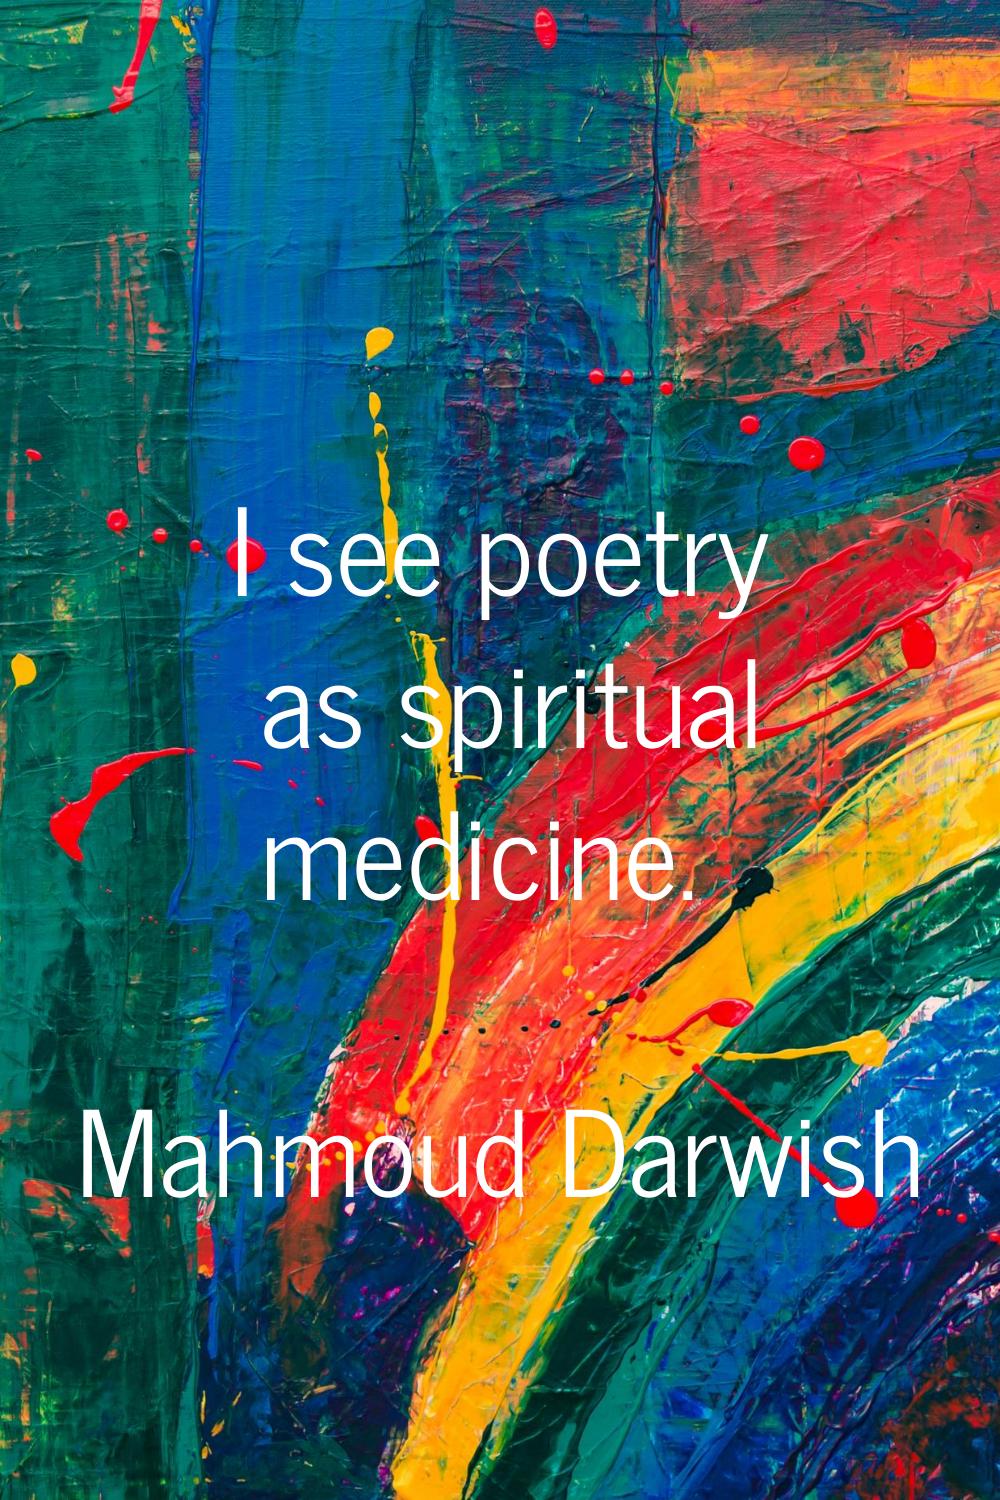 I see poetry as spiritual medicine.